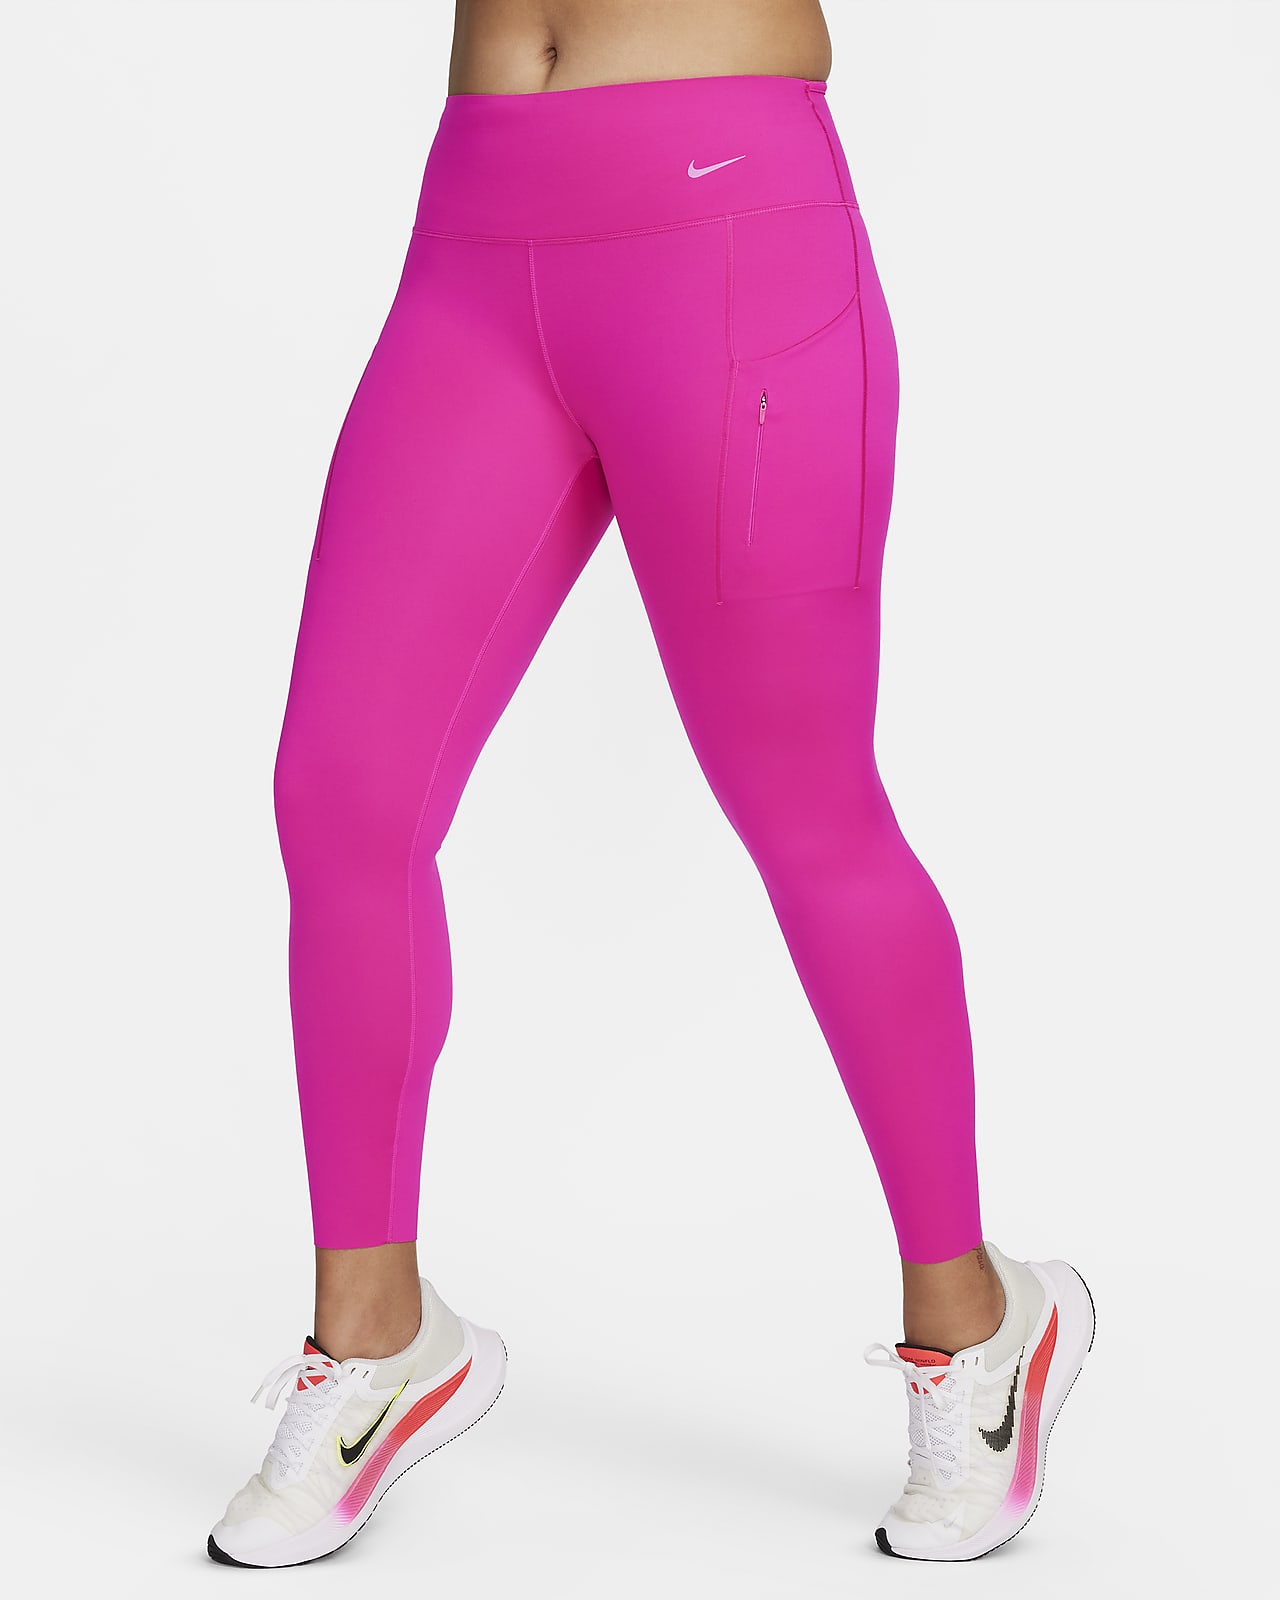 HUGO Boss Ladies Sports Leggings Nicago Bright Pink Size XS New